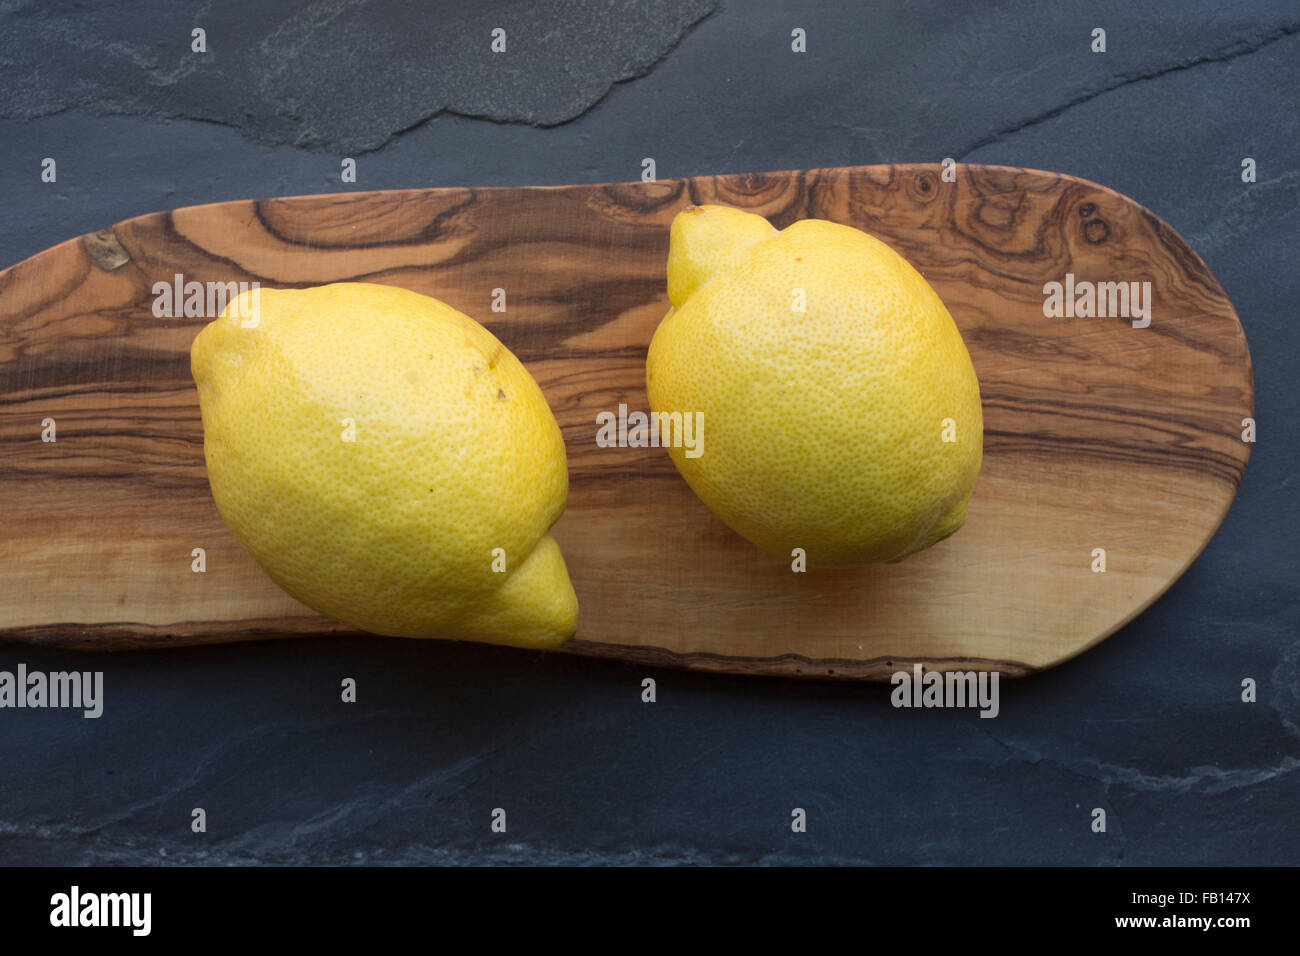 Two lemons on wood board Stock Photo